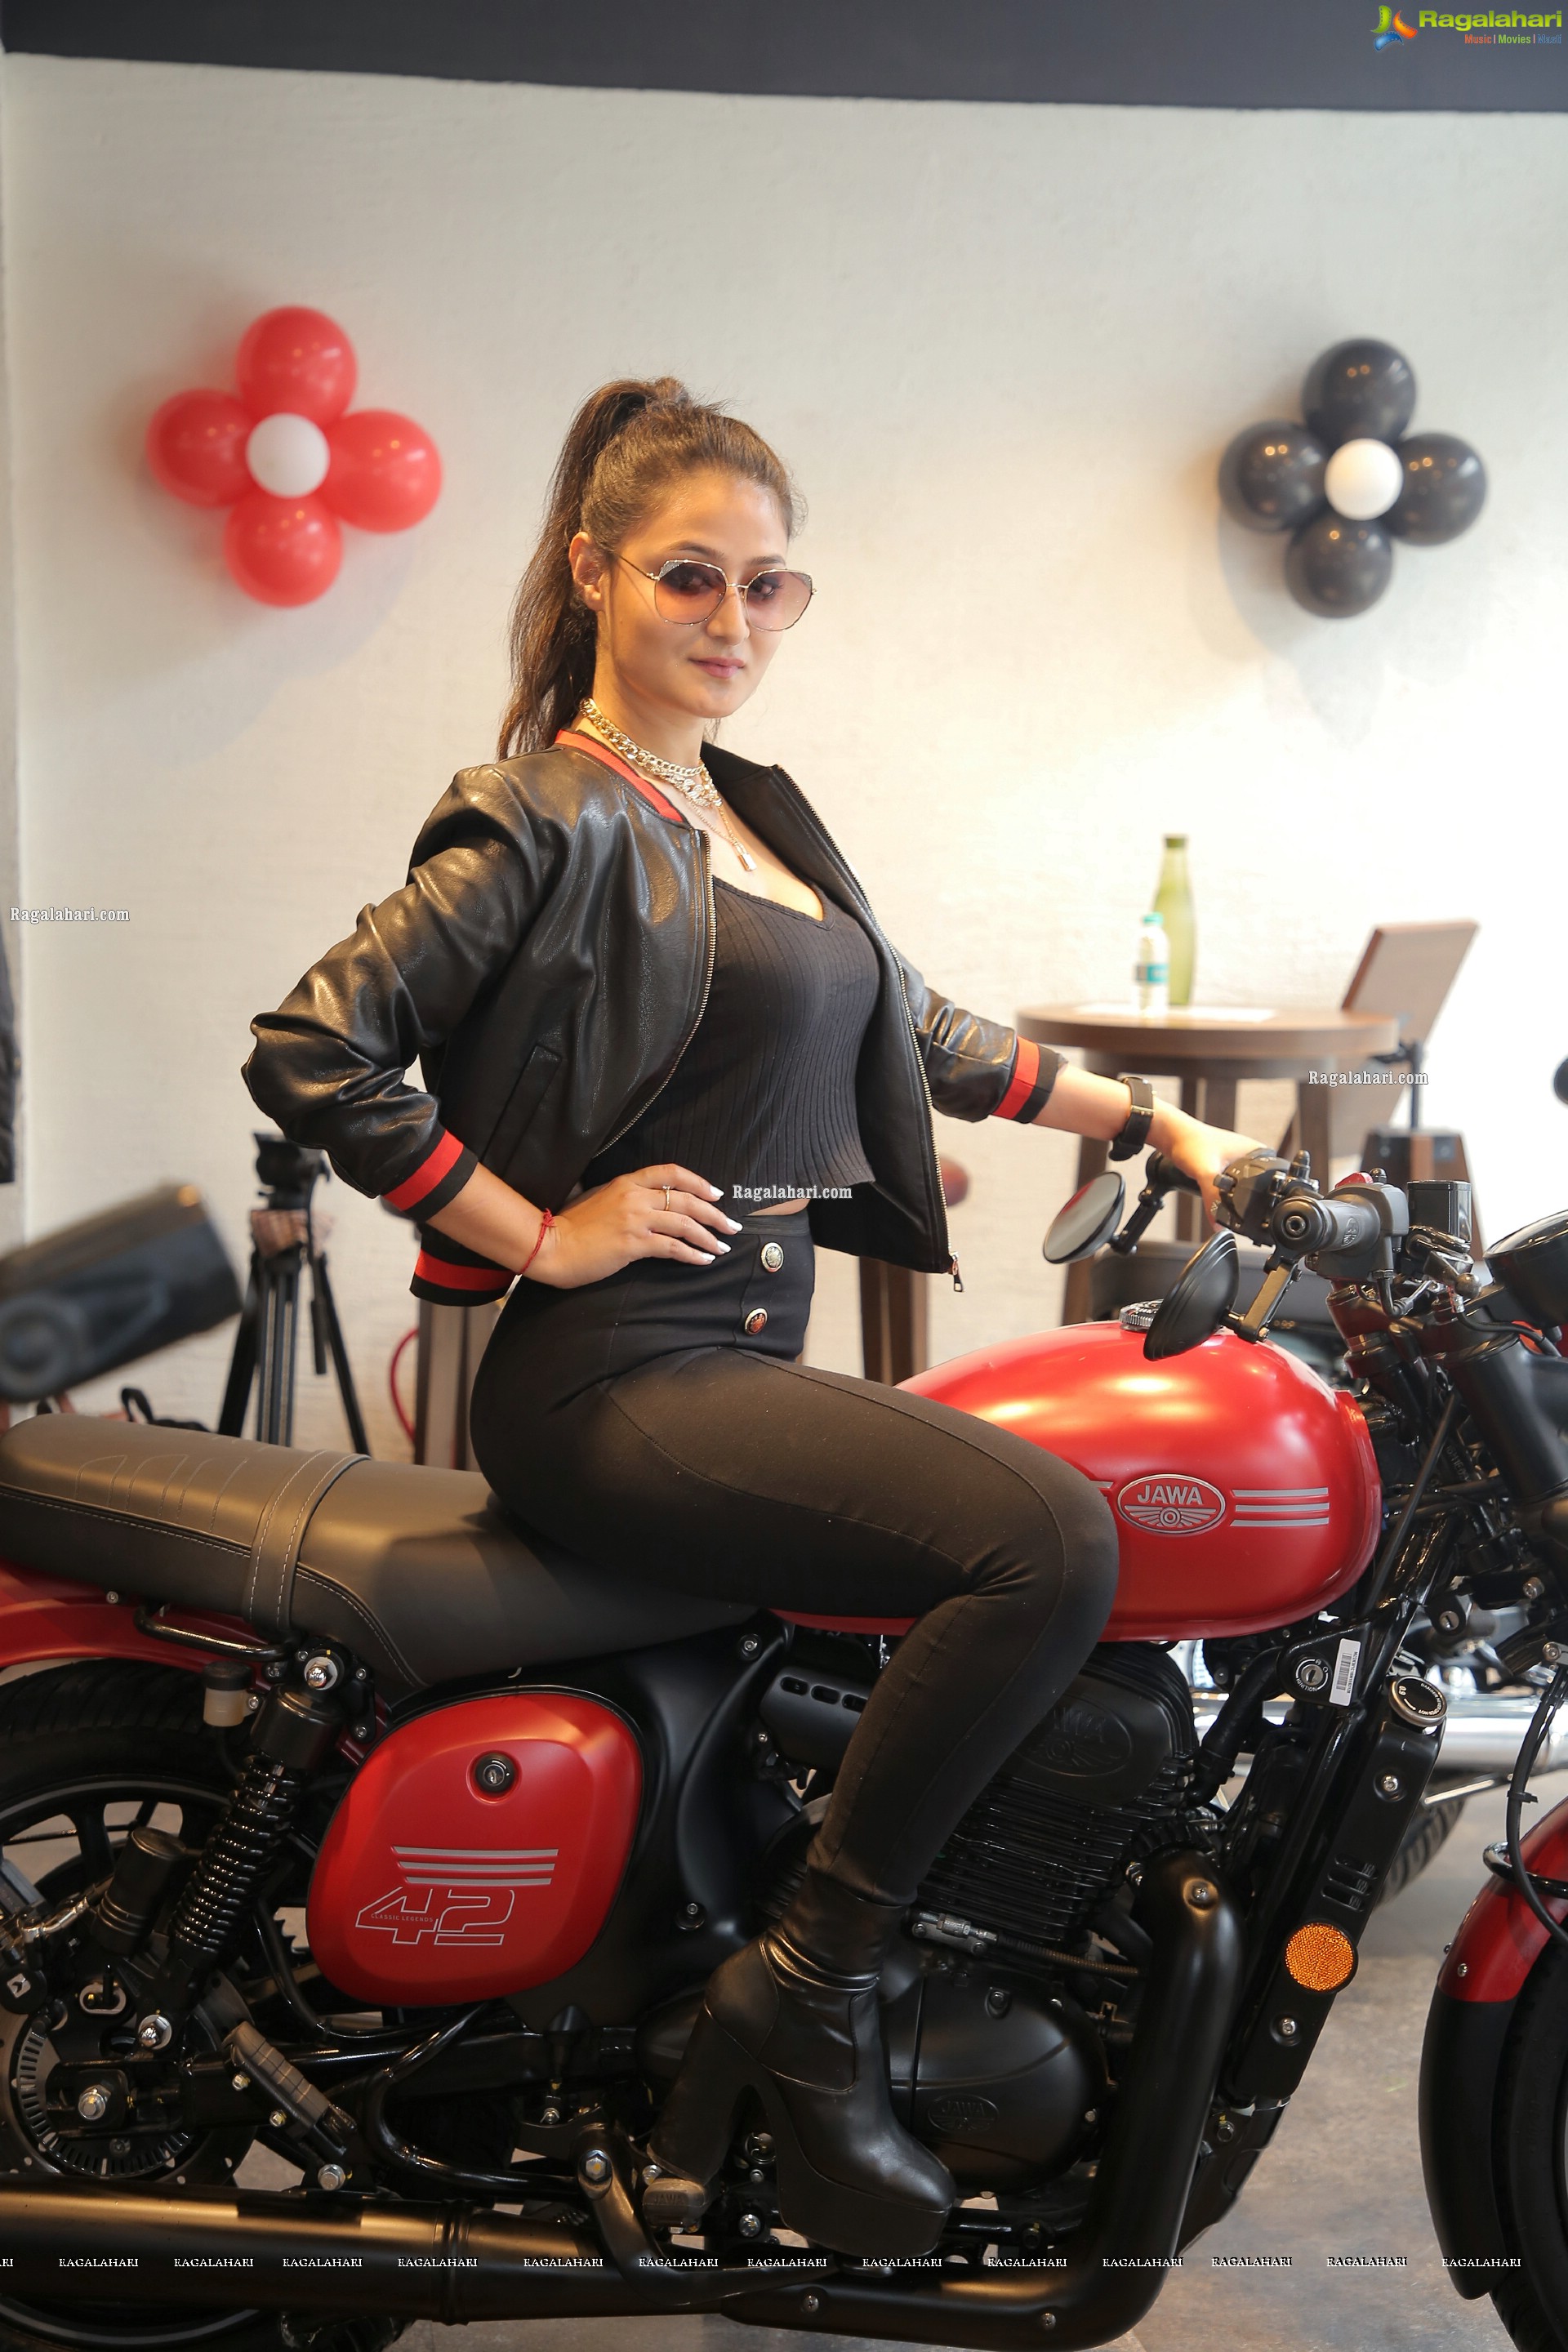 Nilofer Haidry Posing on a Bike Wearing Leather Jacket, HD Photo Gallery